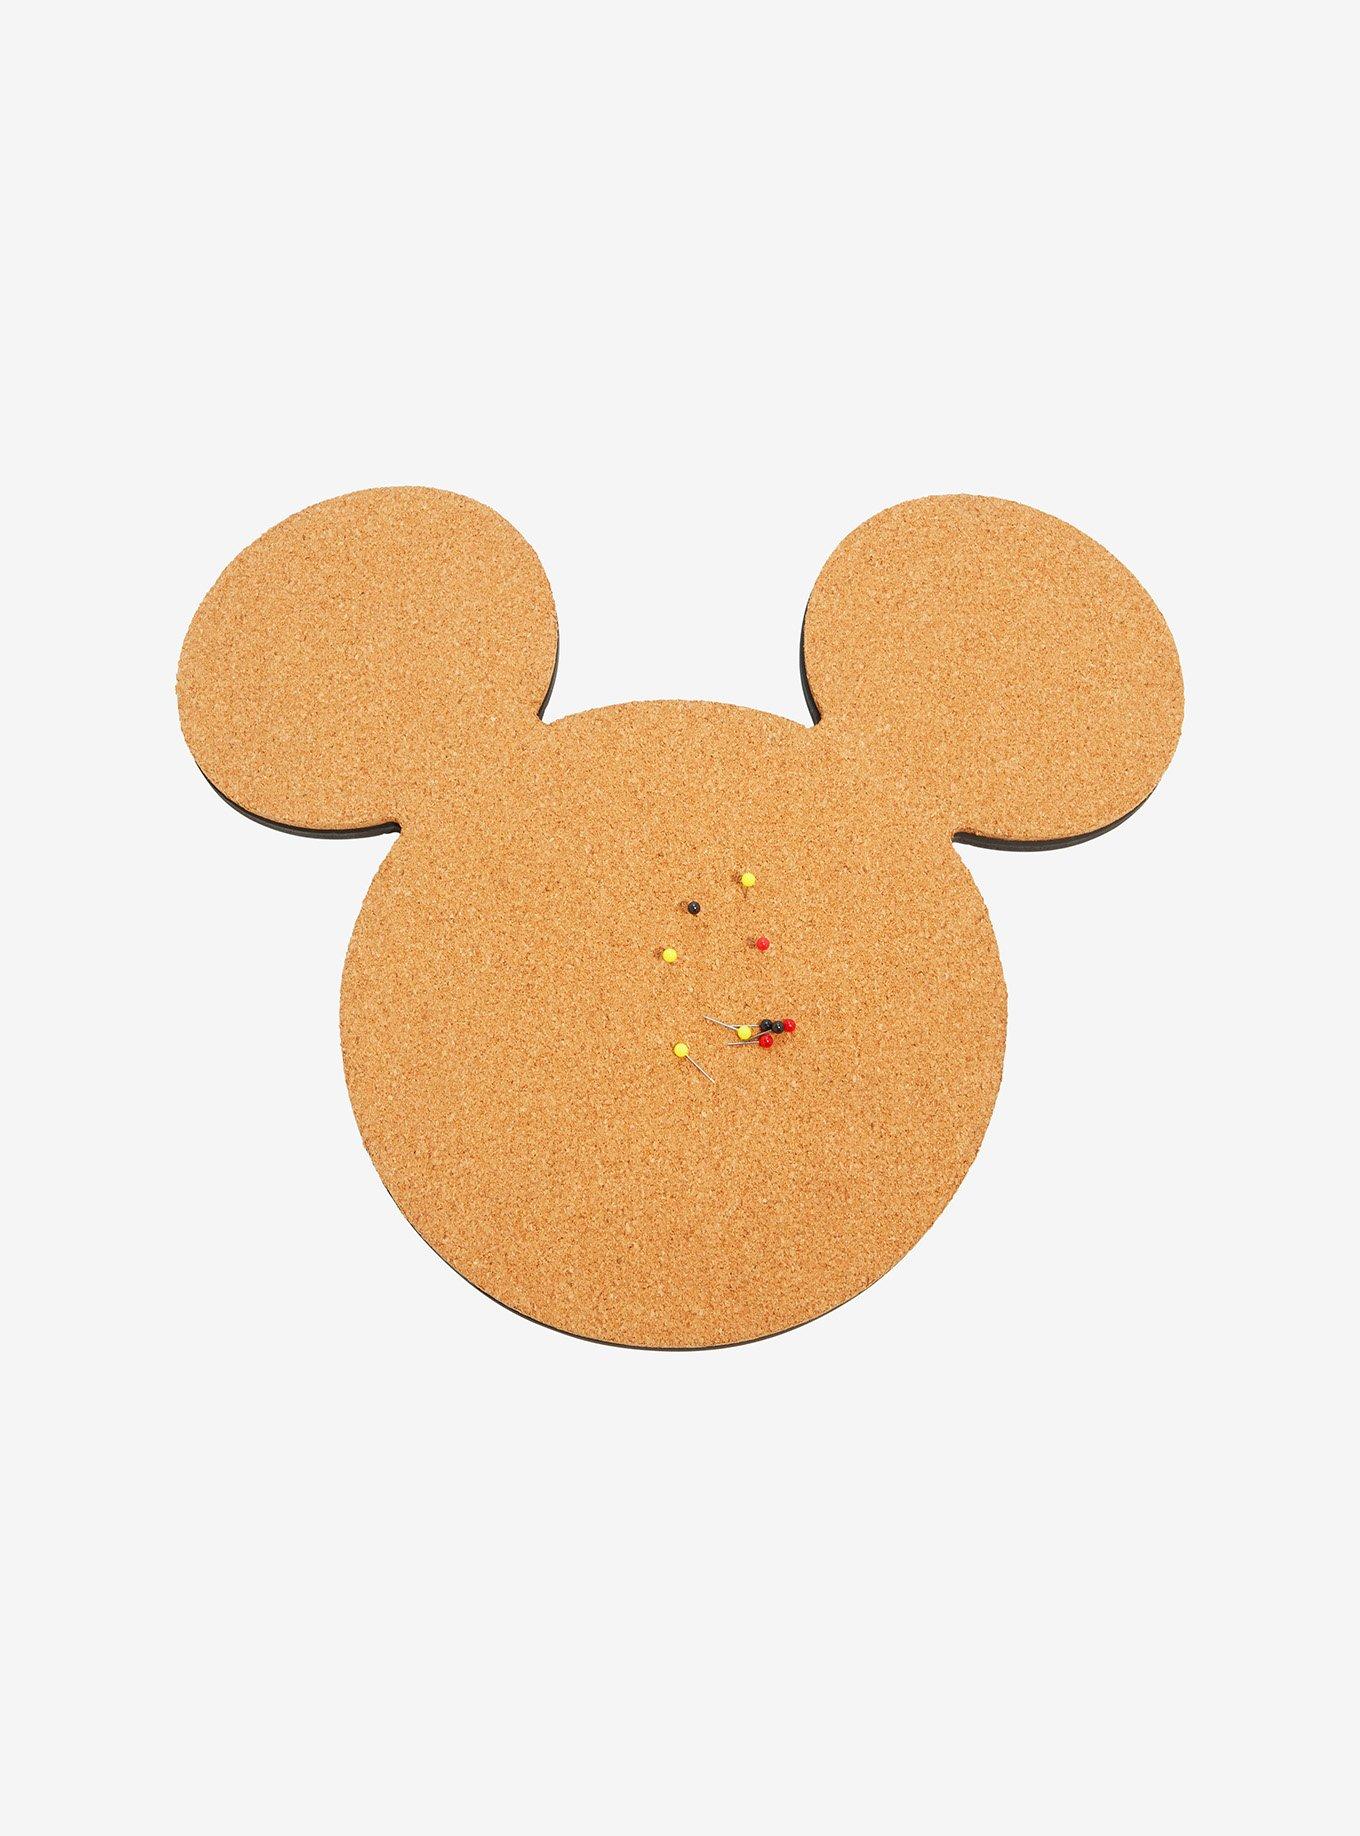 New Disney Pin Mickey or Minnie Shape Cork Board Pin Trading Wall Display